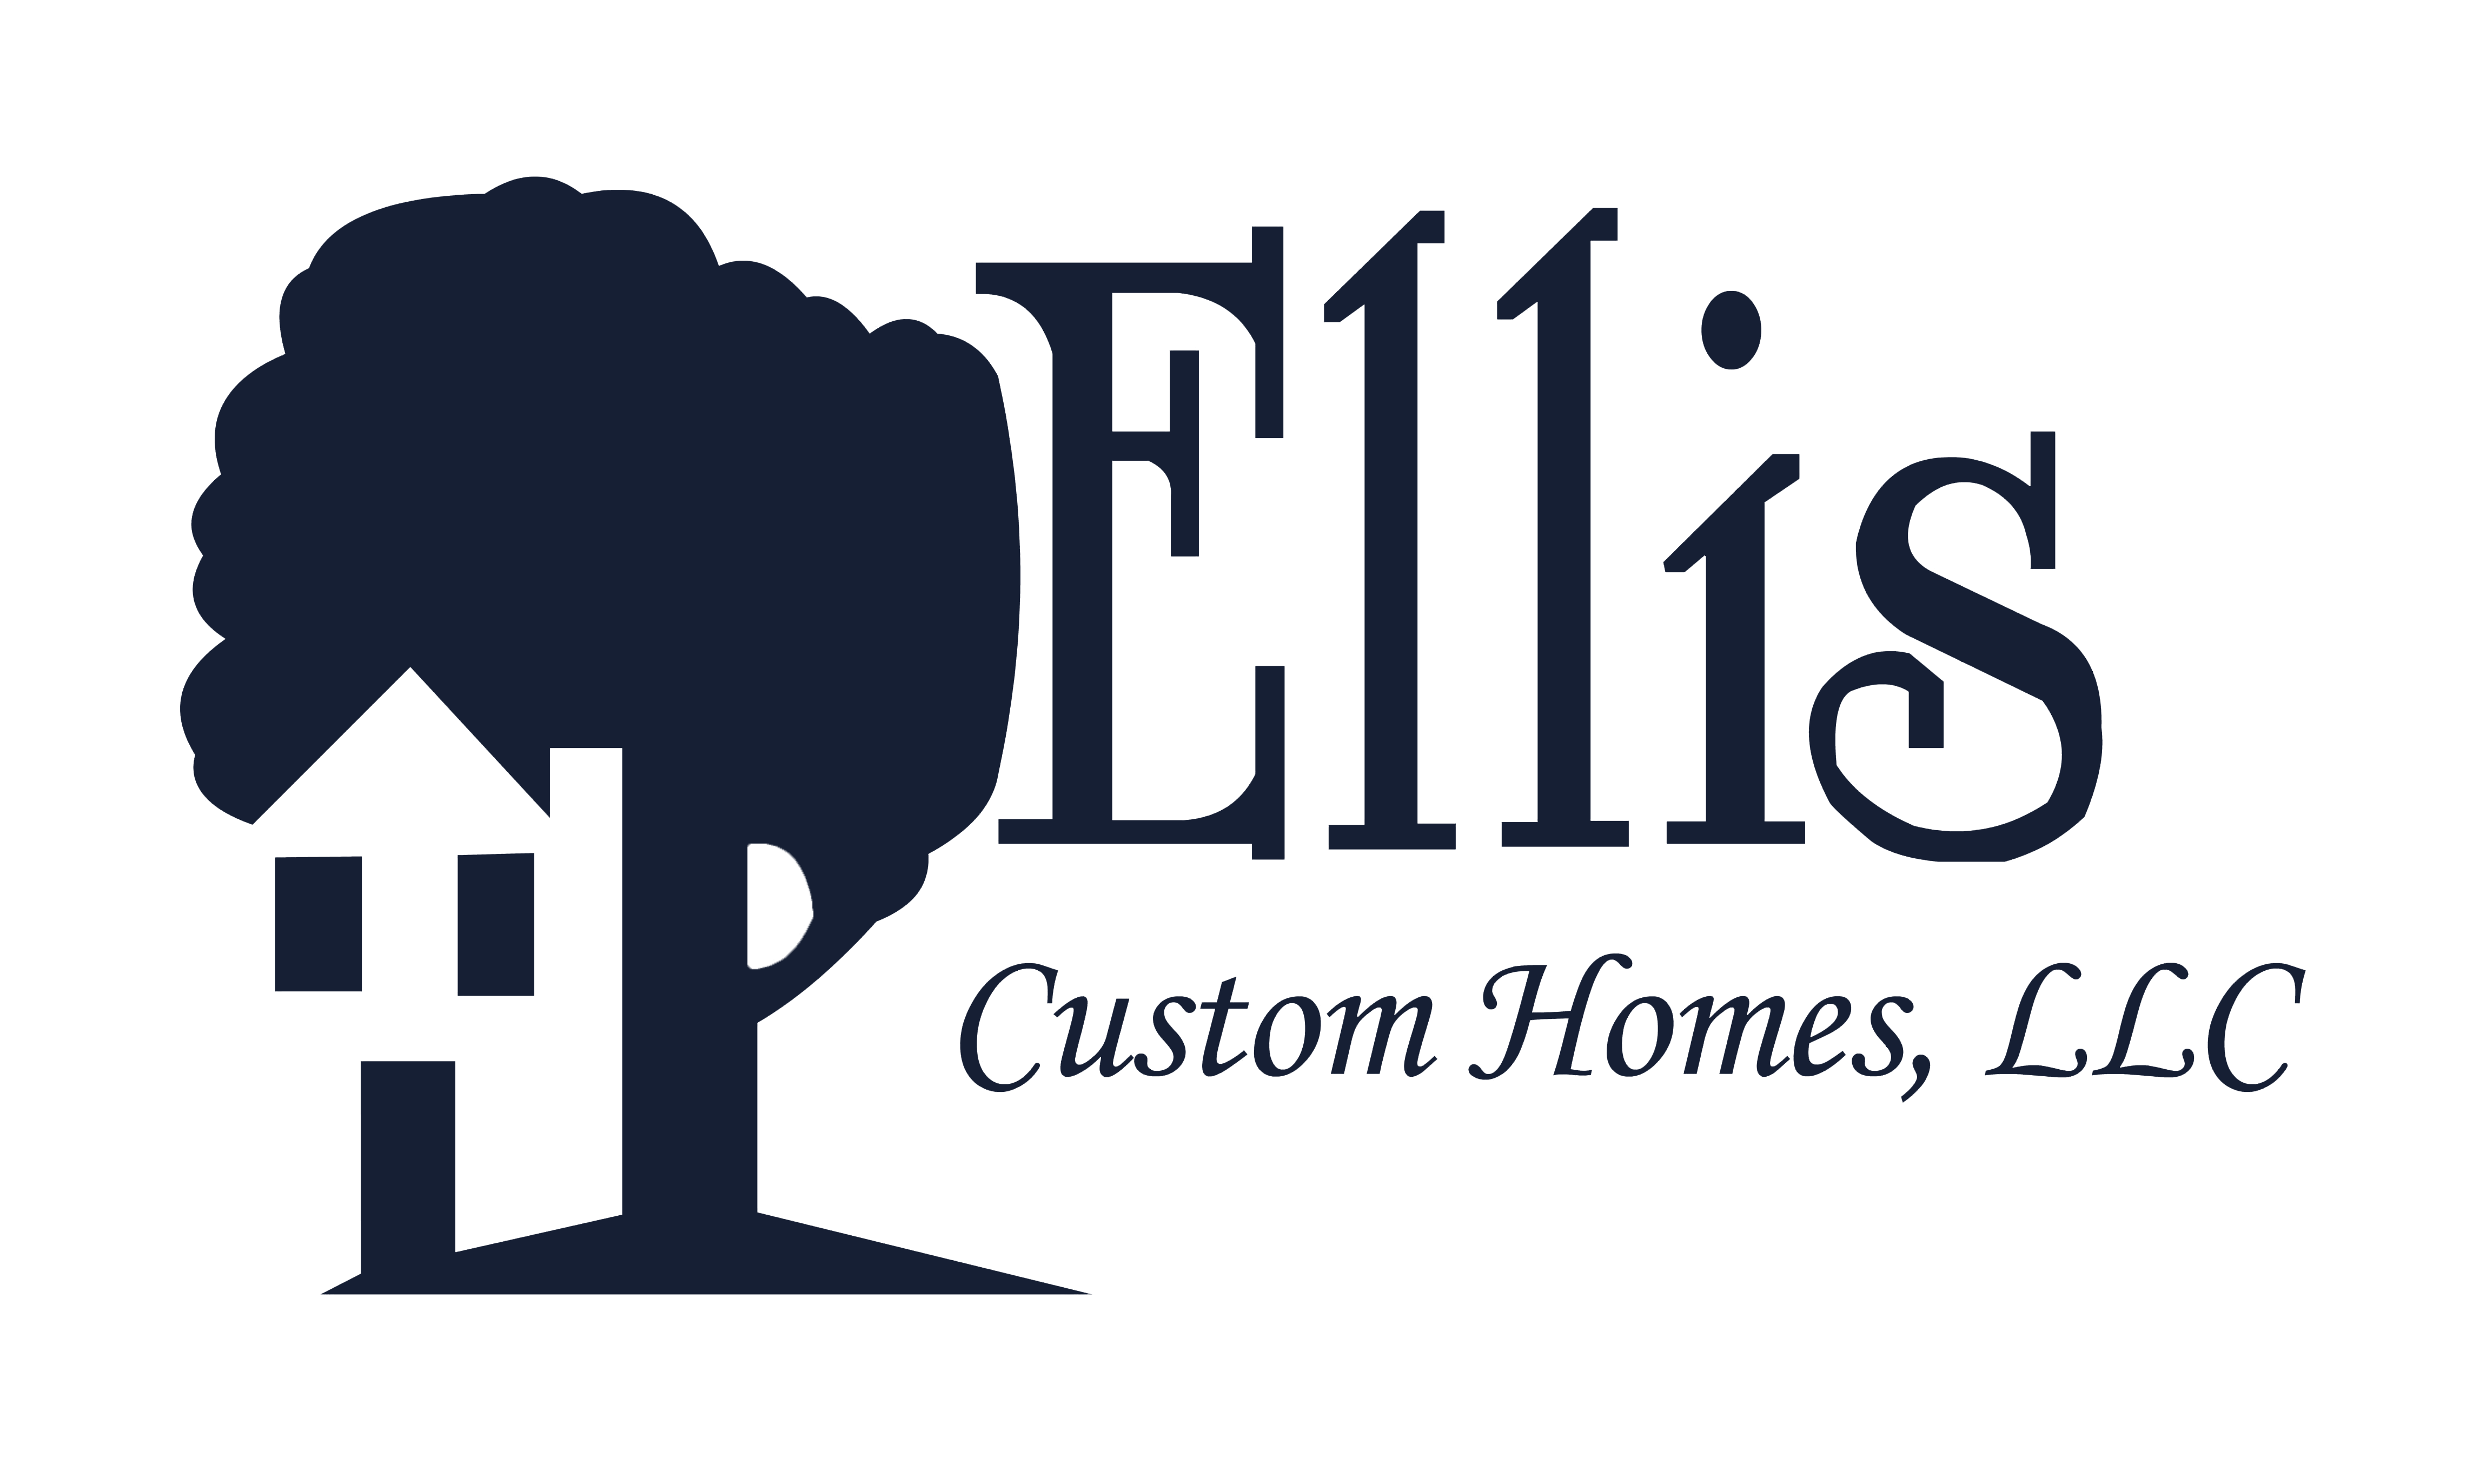 Ellis Logo - Ellis Custom Homes